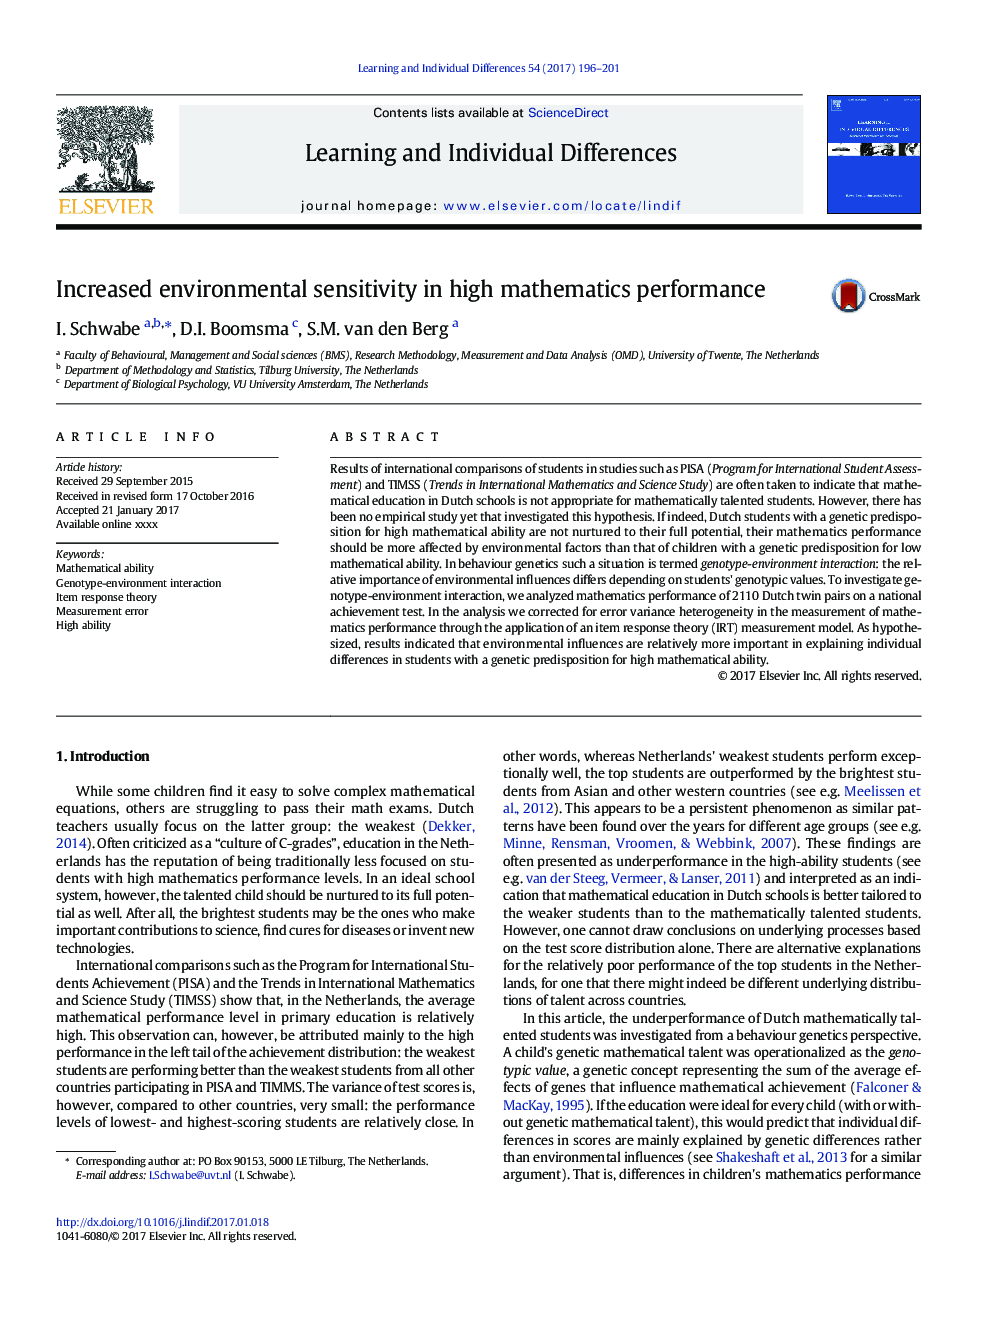 Increased environmental sensitivity in high mathematics performance